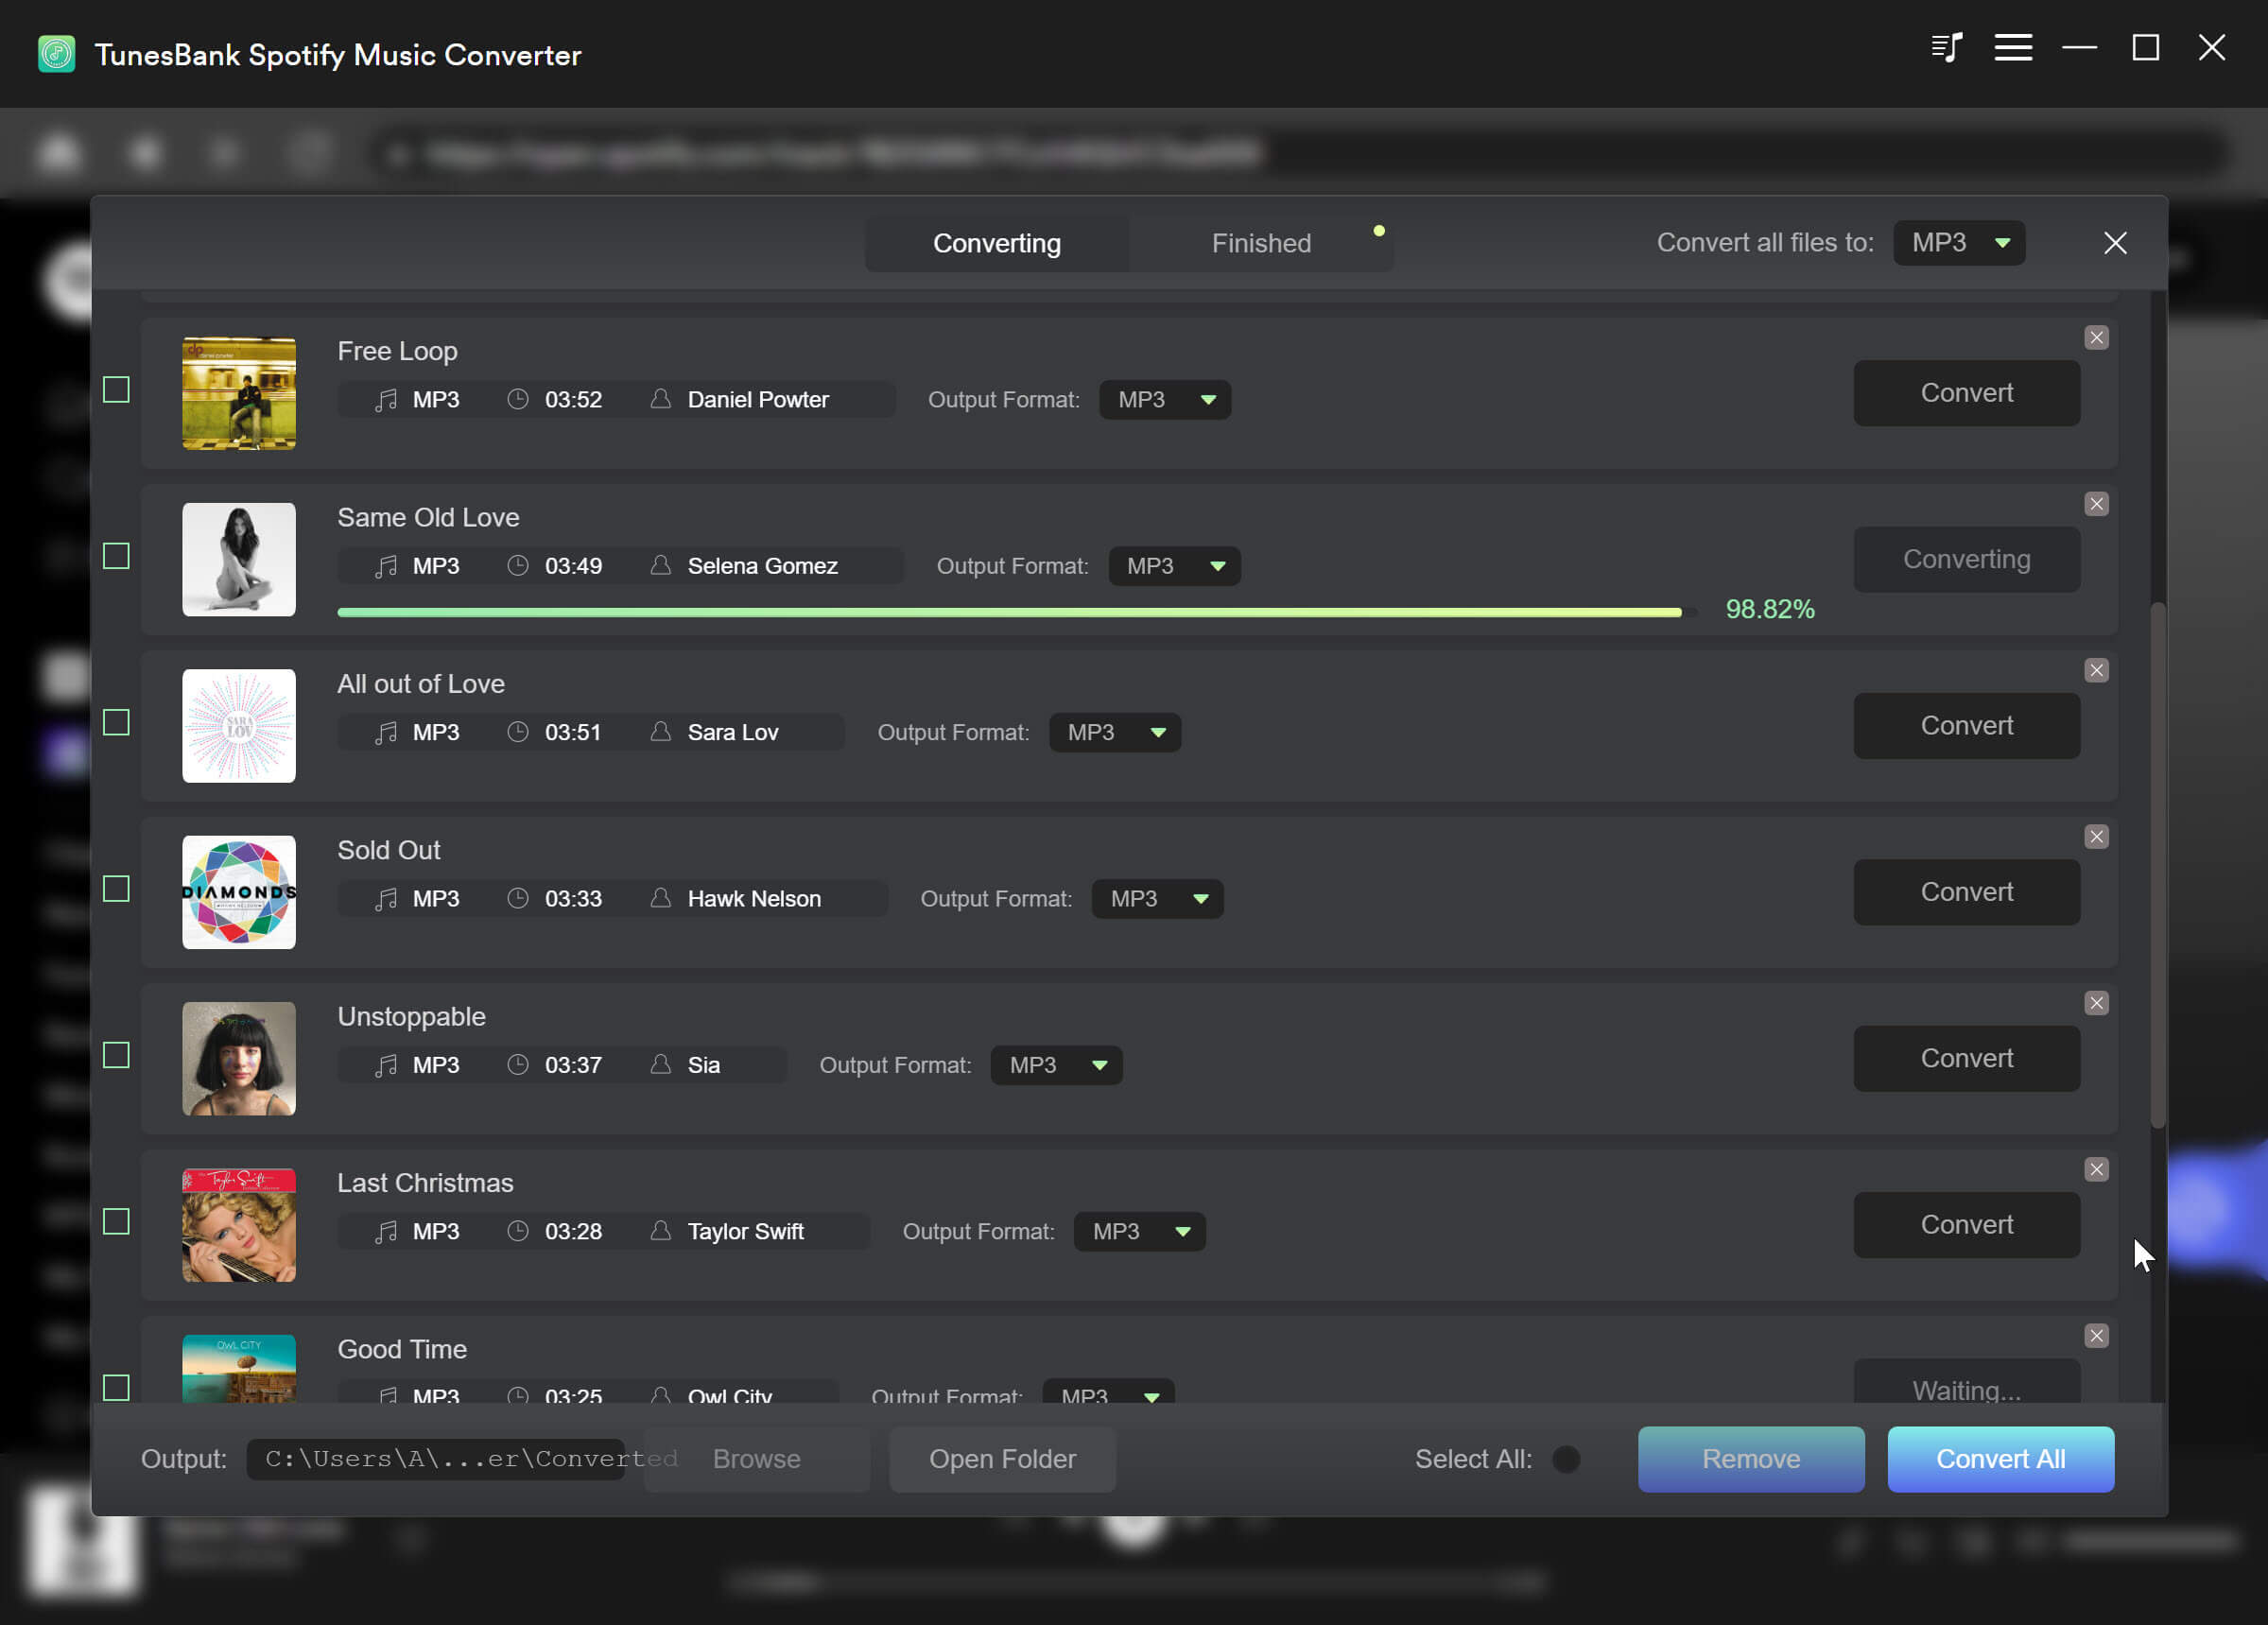 TunesBank Spotify Music Converter download spotify music to mp3